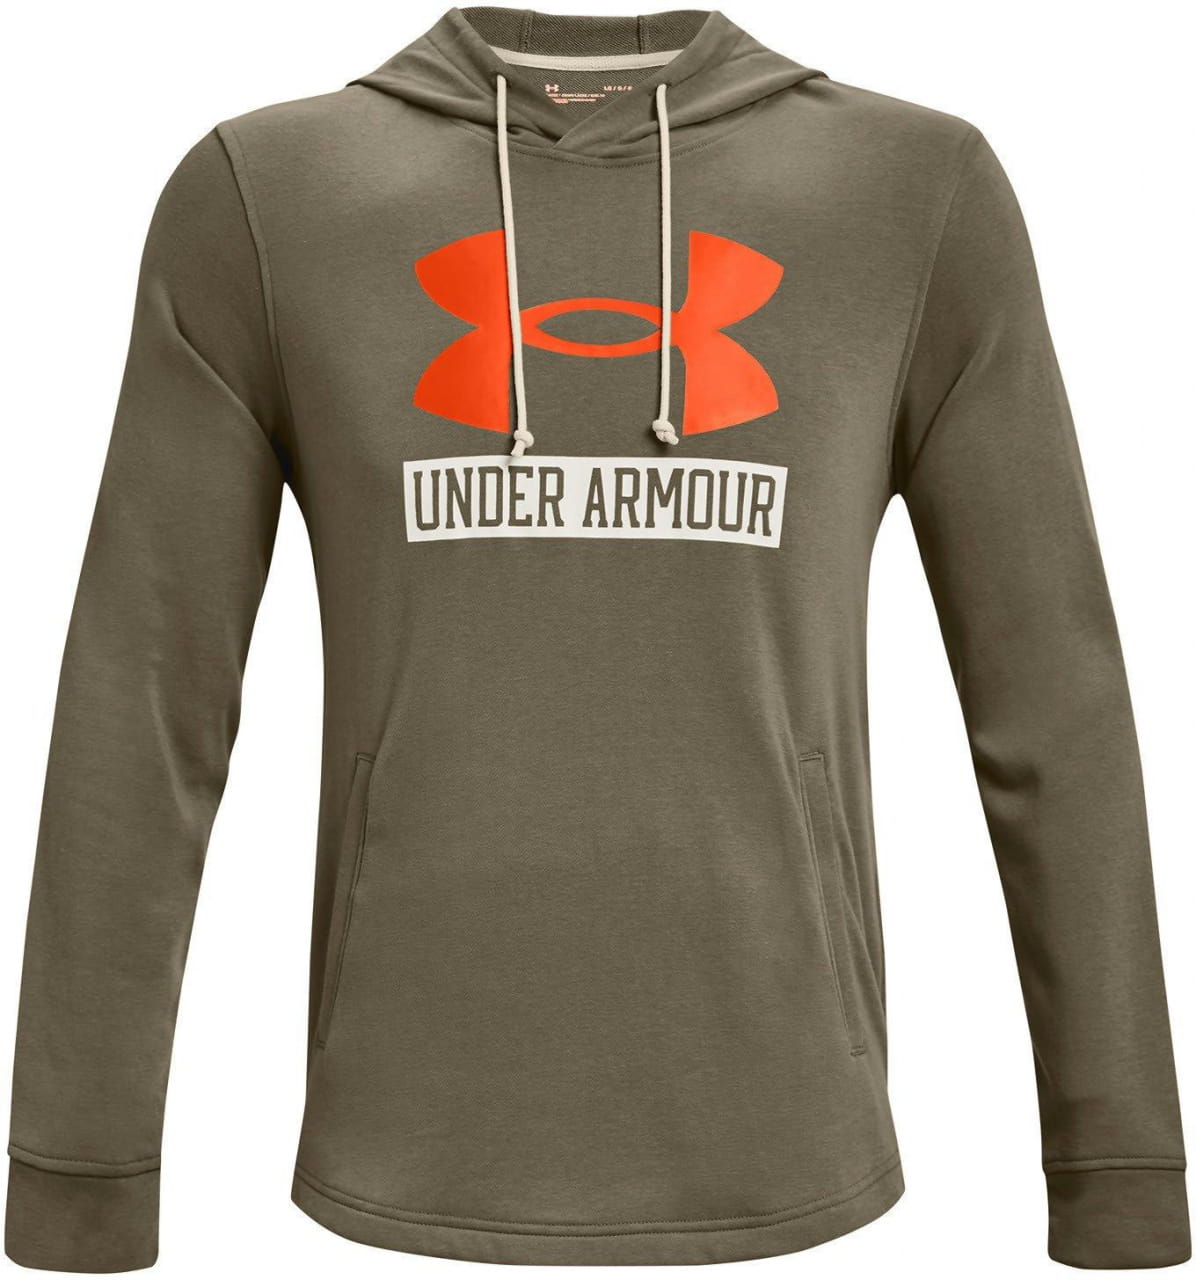 Under Armour UA Hoodie Sweatshirt Pullover Gray/Black Logo - Men’s M